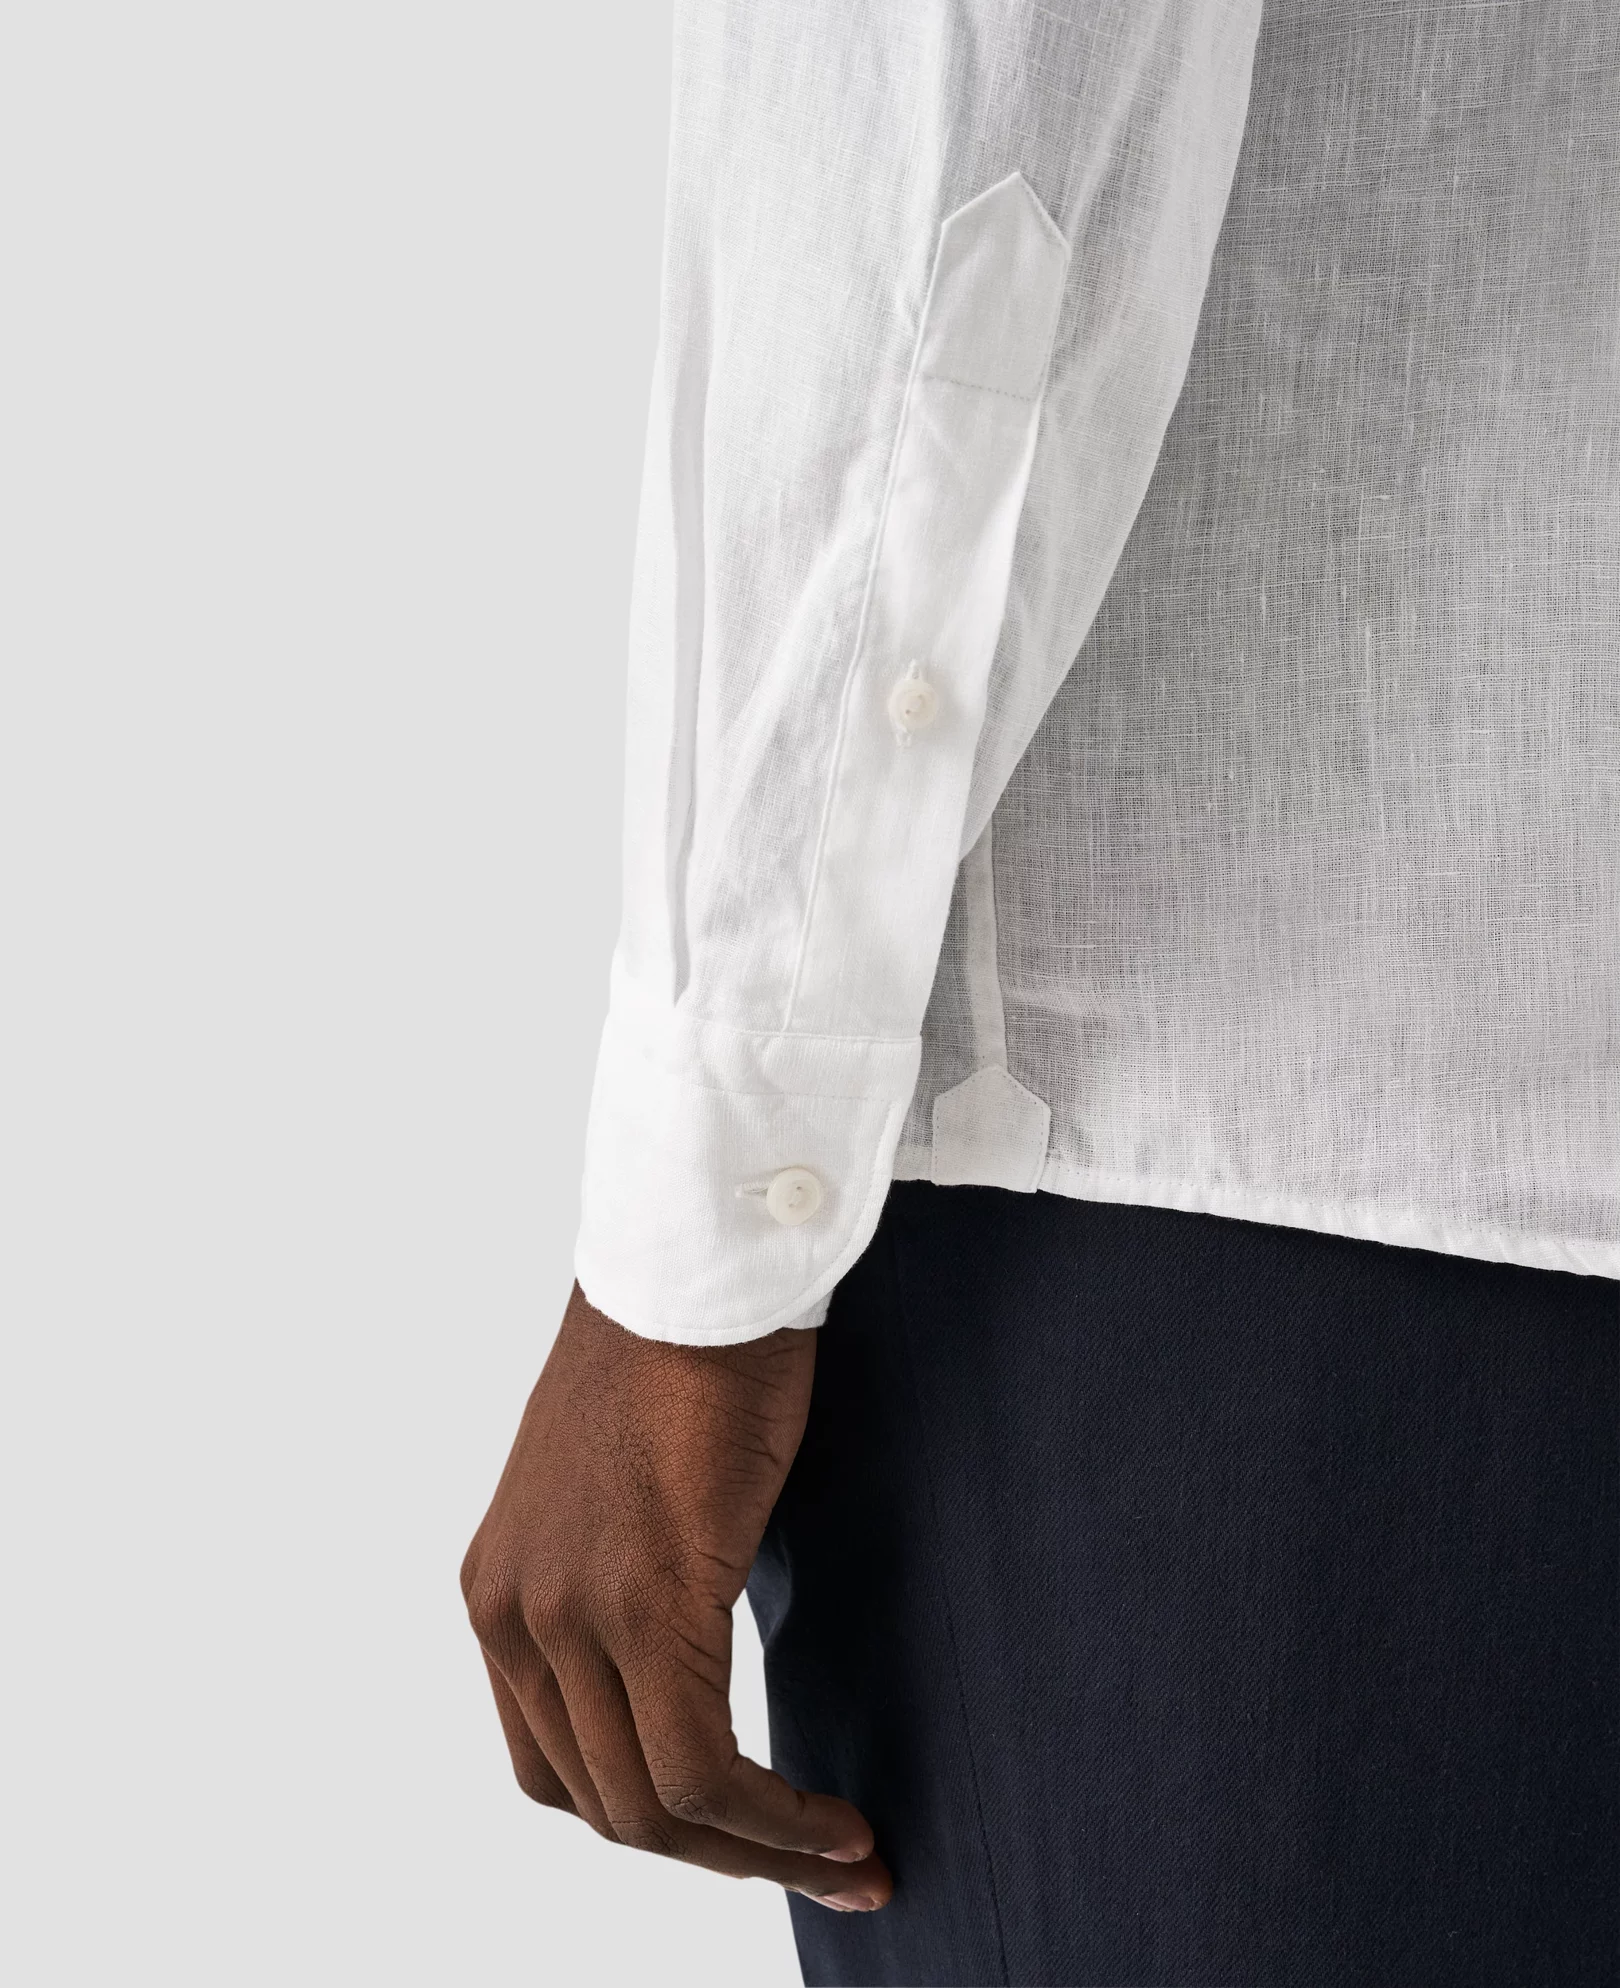 Eton - white linen button down collar